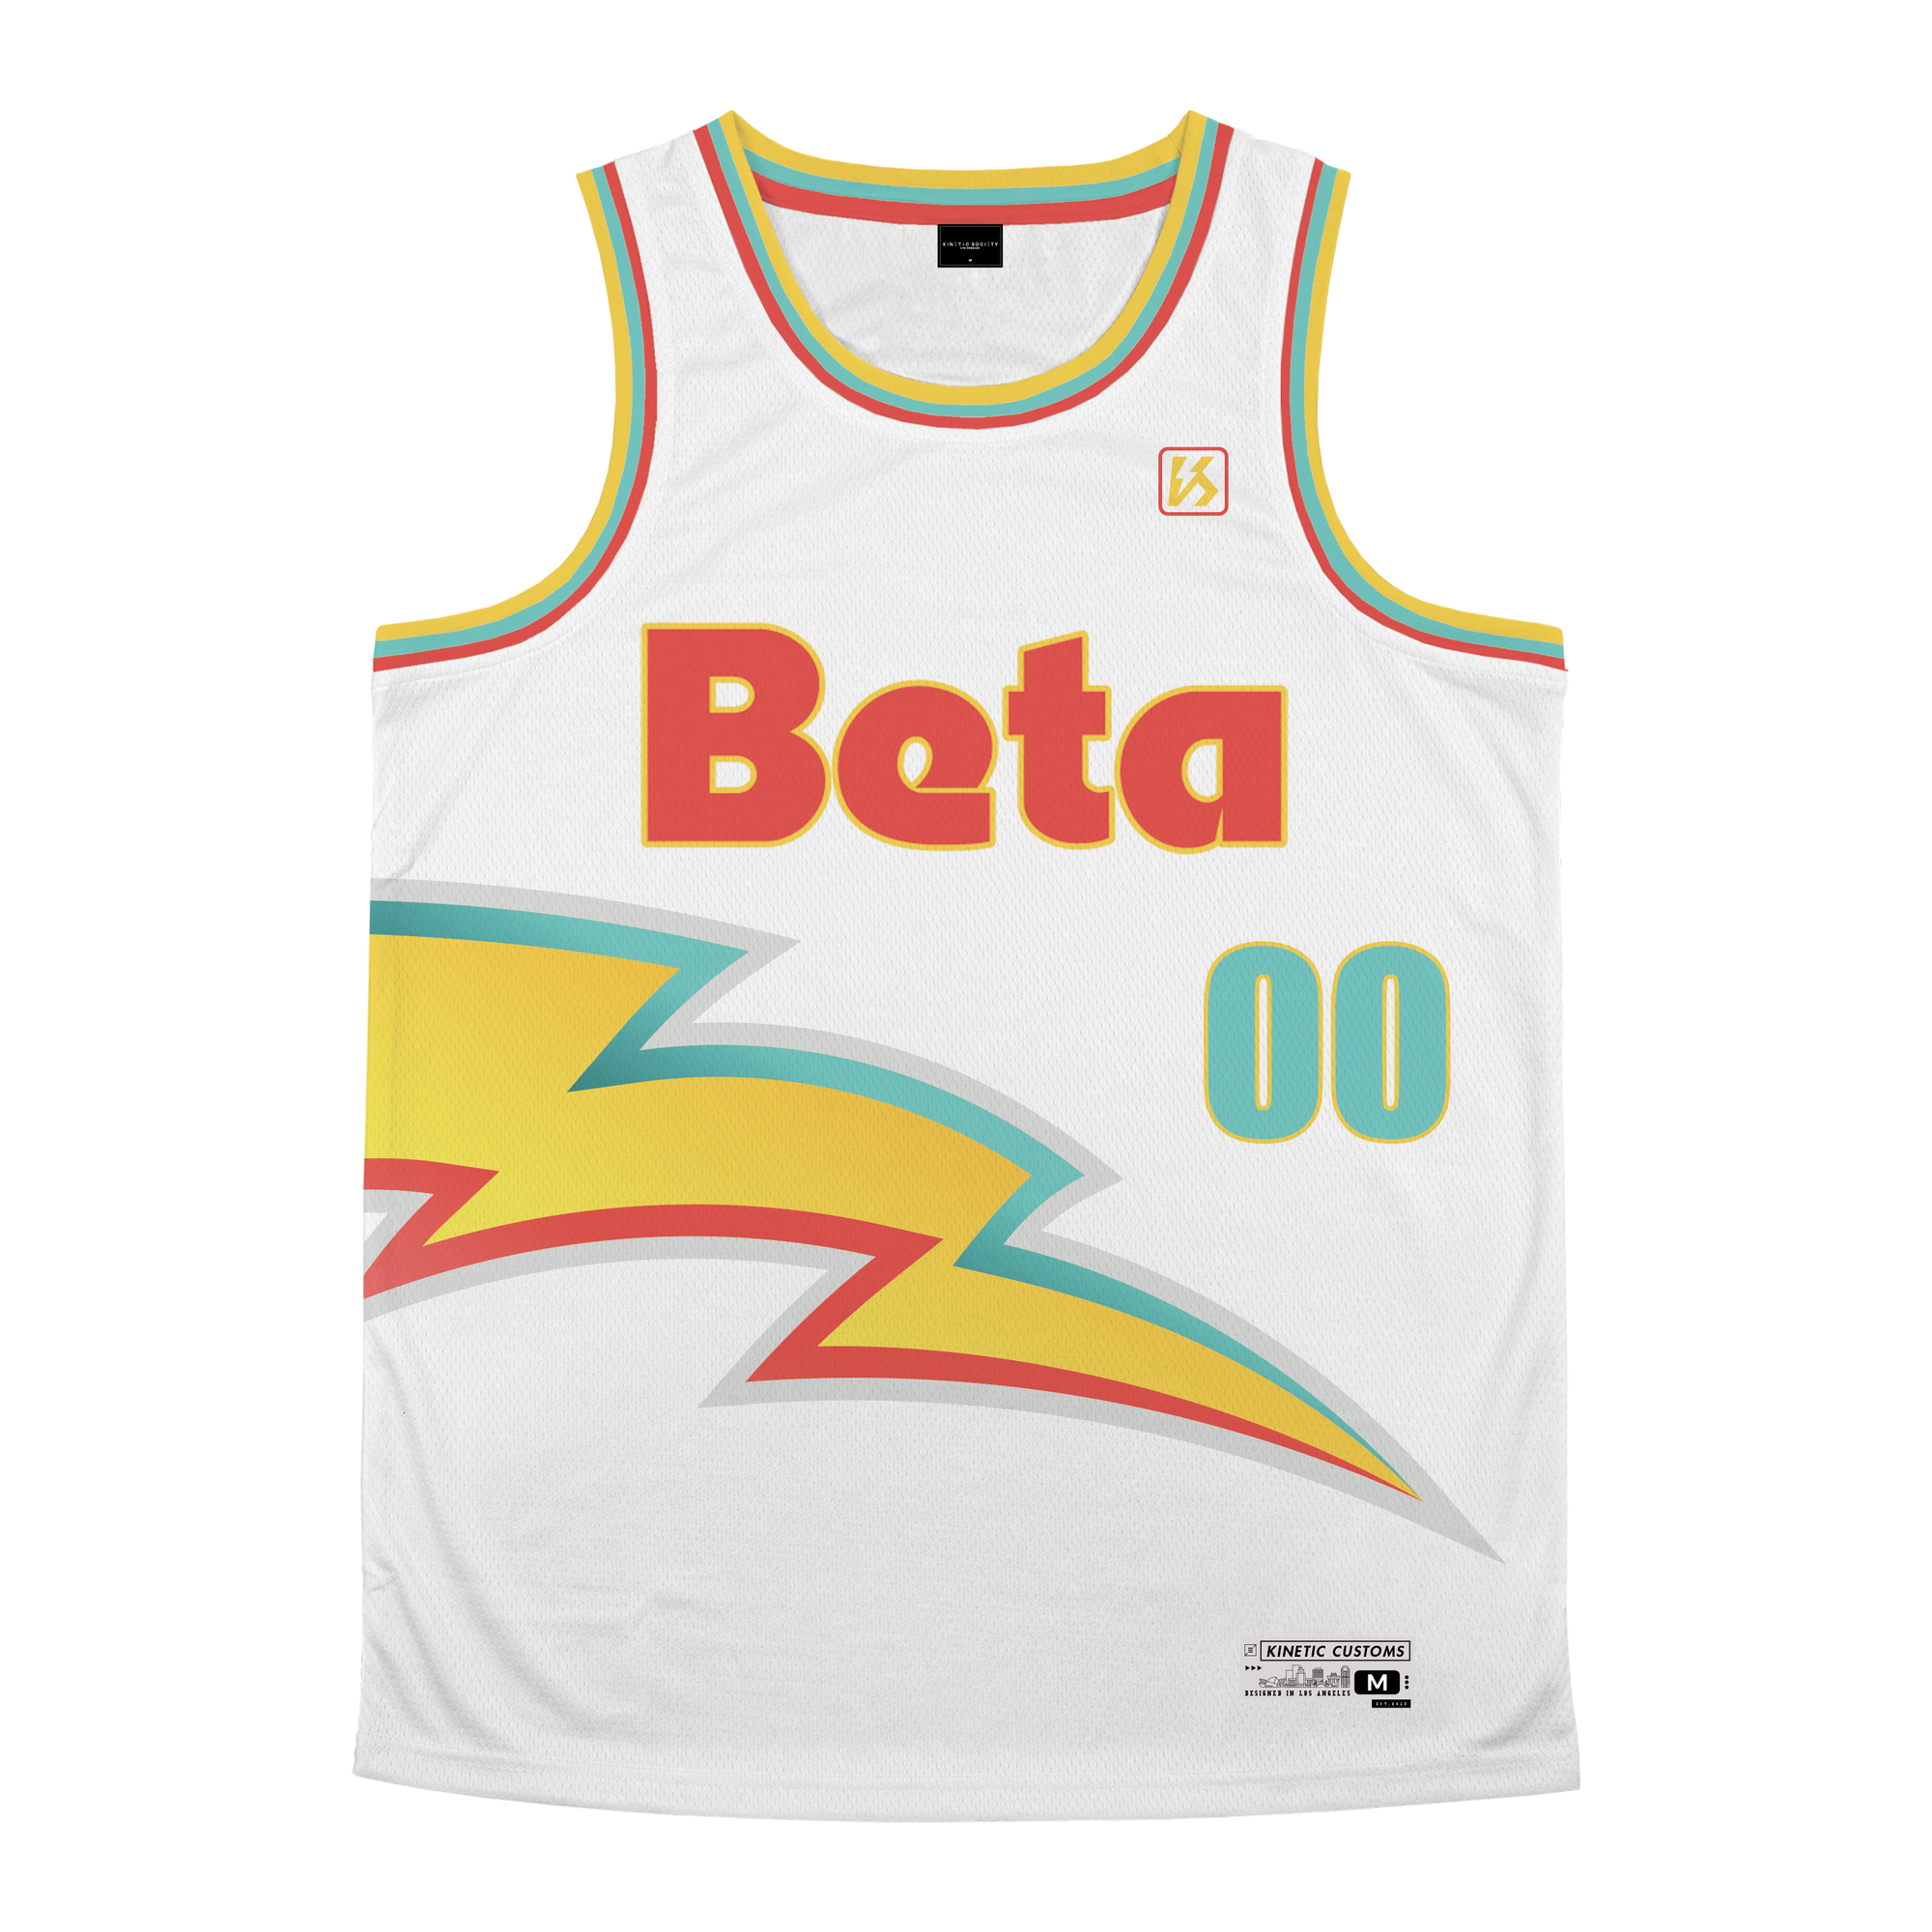 Beta Theta Pi - Bolt Basketball Jersey